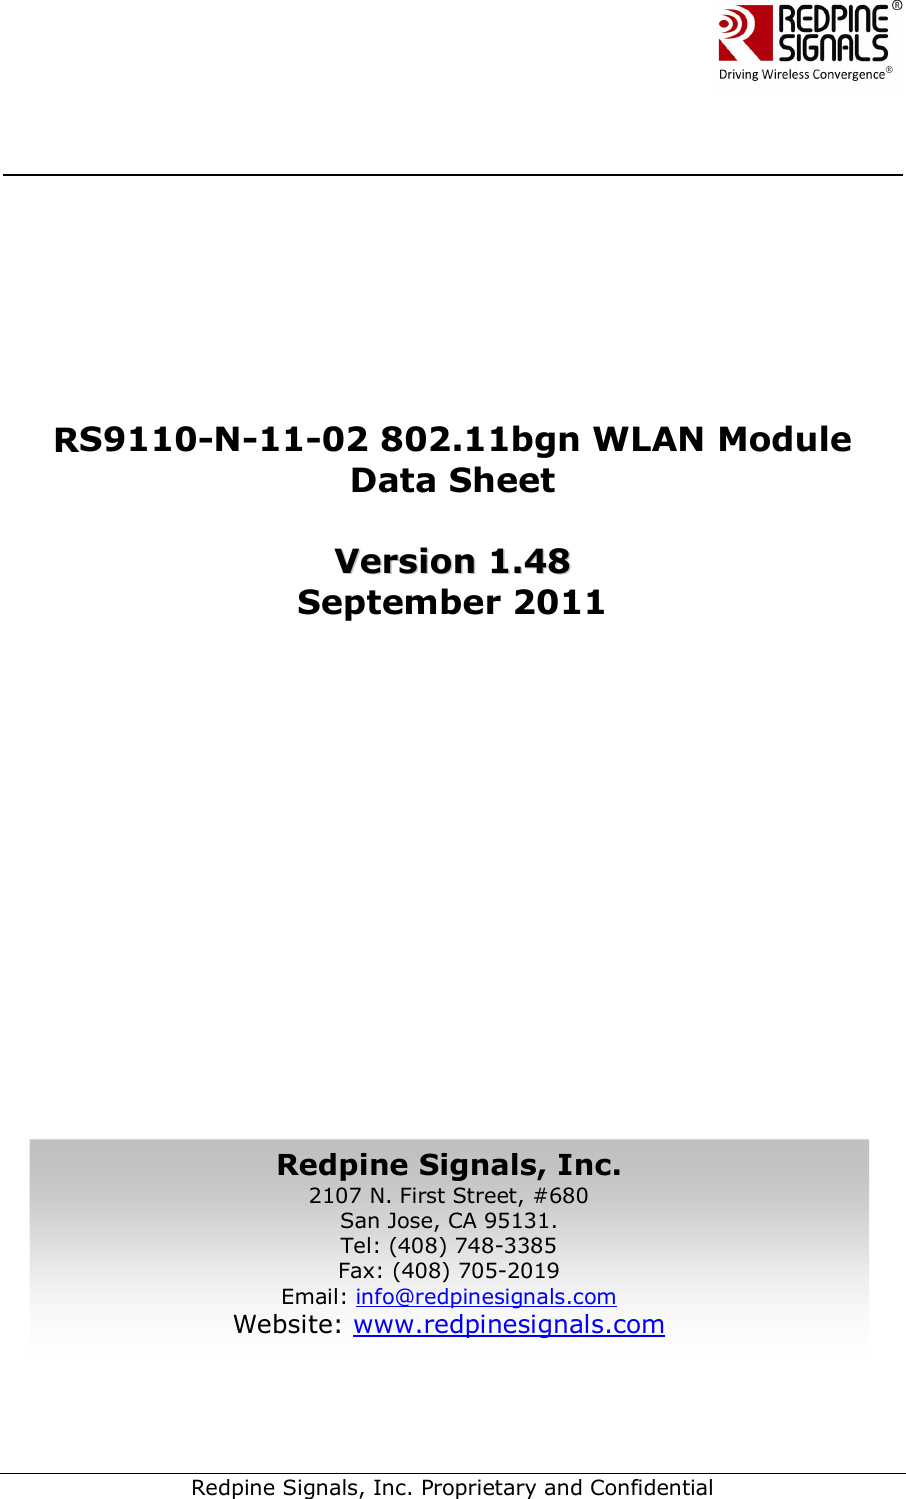        Redpine Signals, Inc. Proprietary and Confidential            RS9110-N-11-02 802.11bgn WLAN Module Data Sheet  VVeerrssiioonn  11..4488  September 2011             Redpine Signals, Inc. 2107 N. First Street, #680 San Jose, CA 95131. Tel: (408) 748-3385 Fax: (408) 705-2019  Email: info@redpinesignals.com  Website: www.redpinesignals.com  